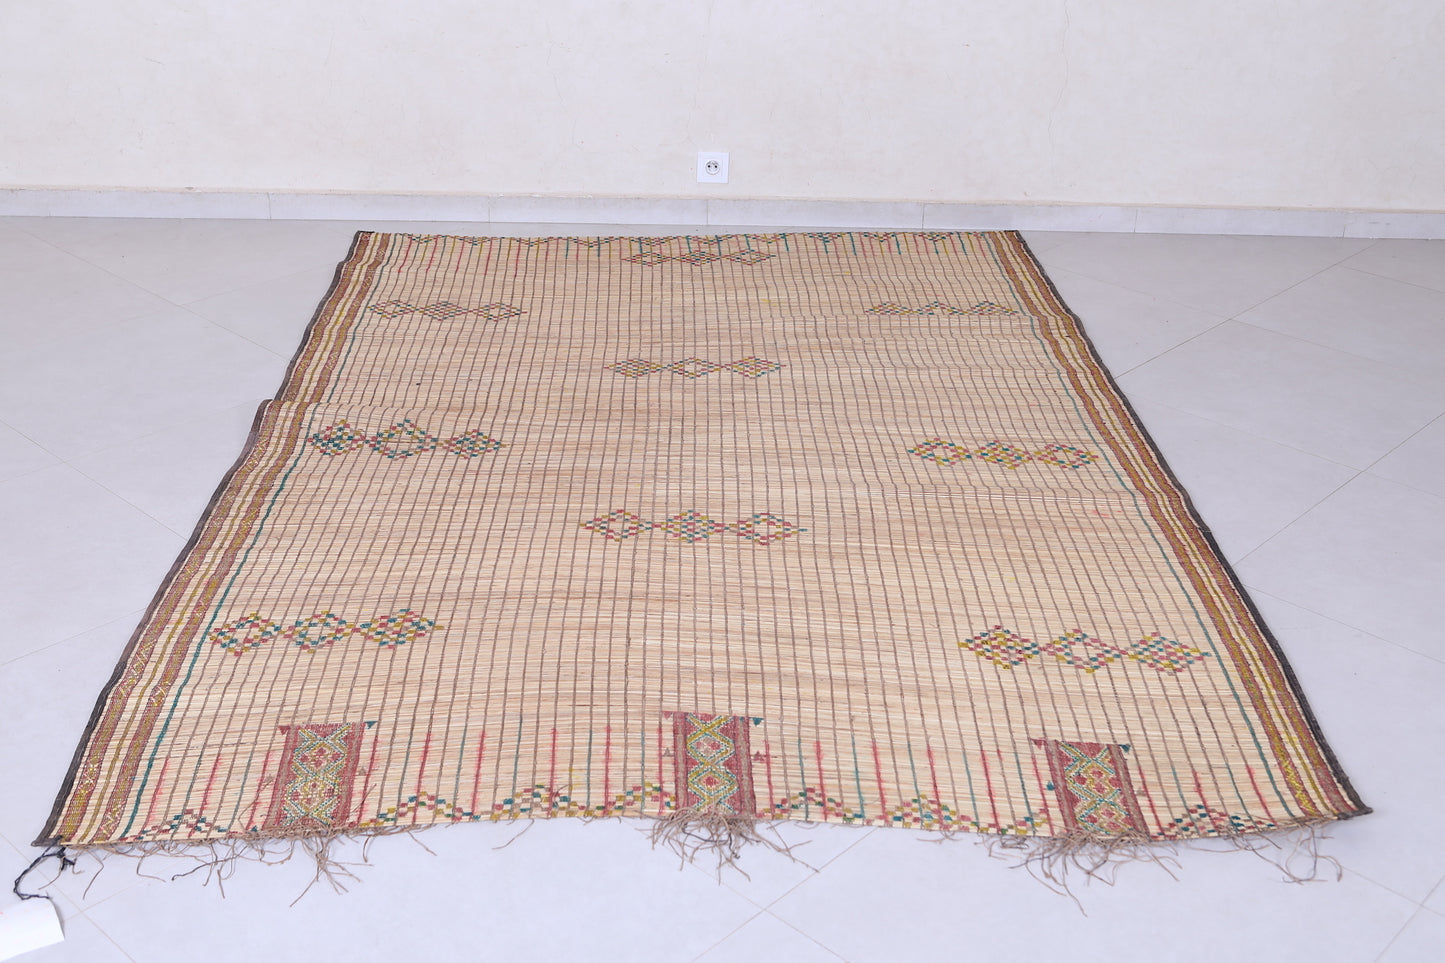 Tuareg rug 5.8 X 8.1 Feet